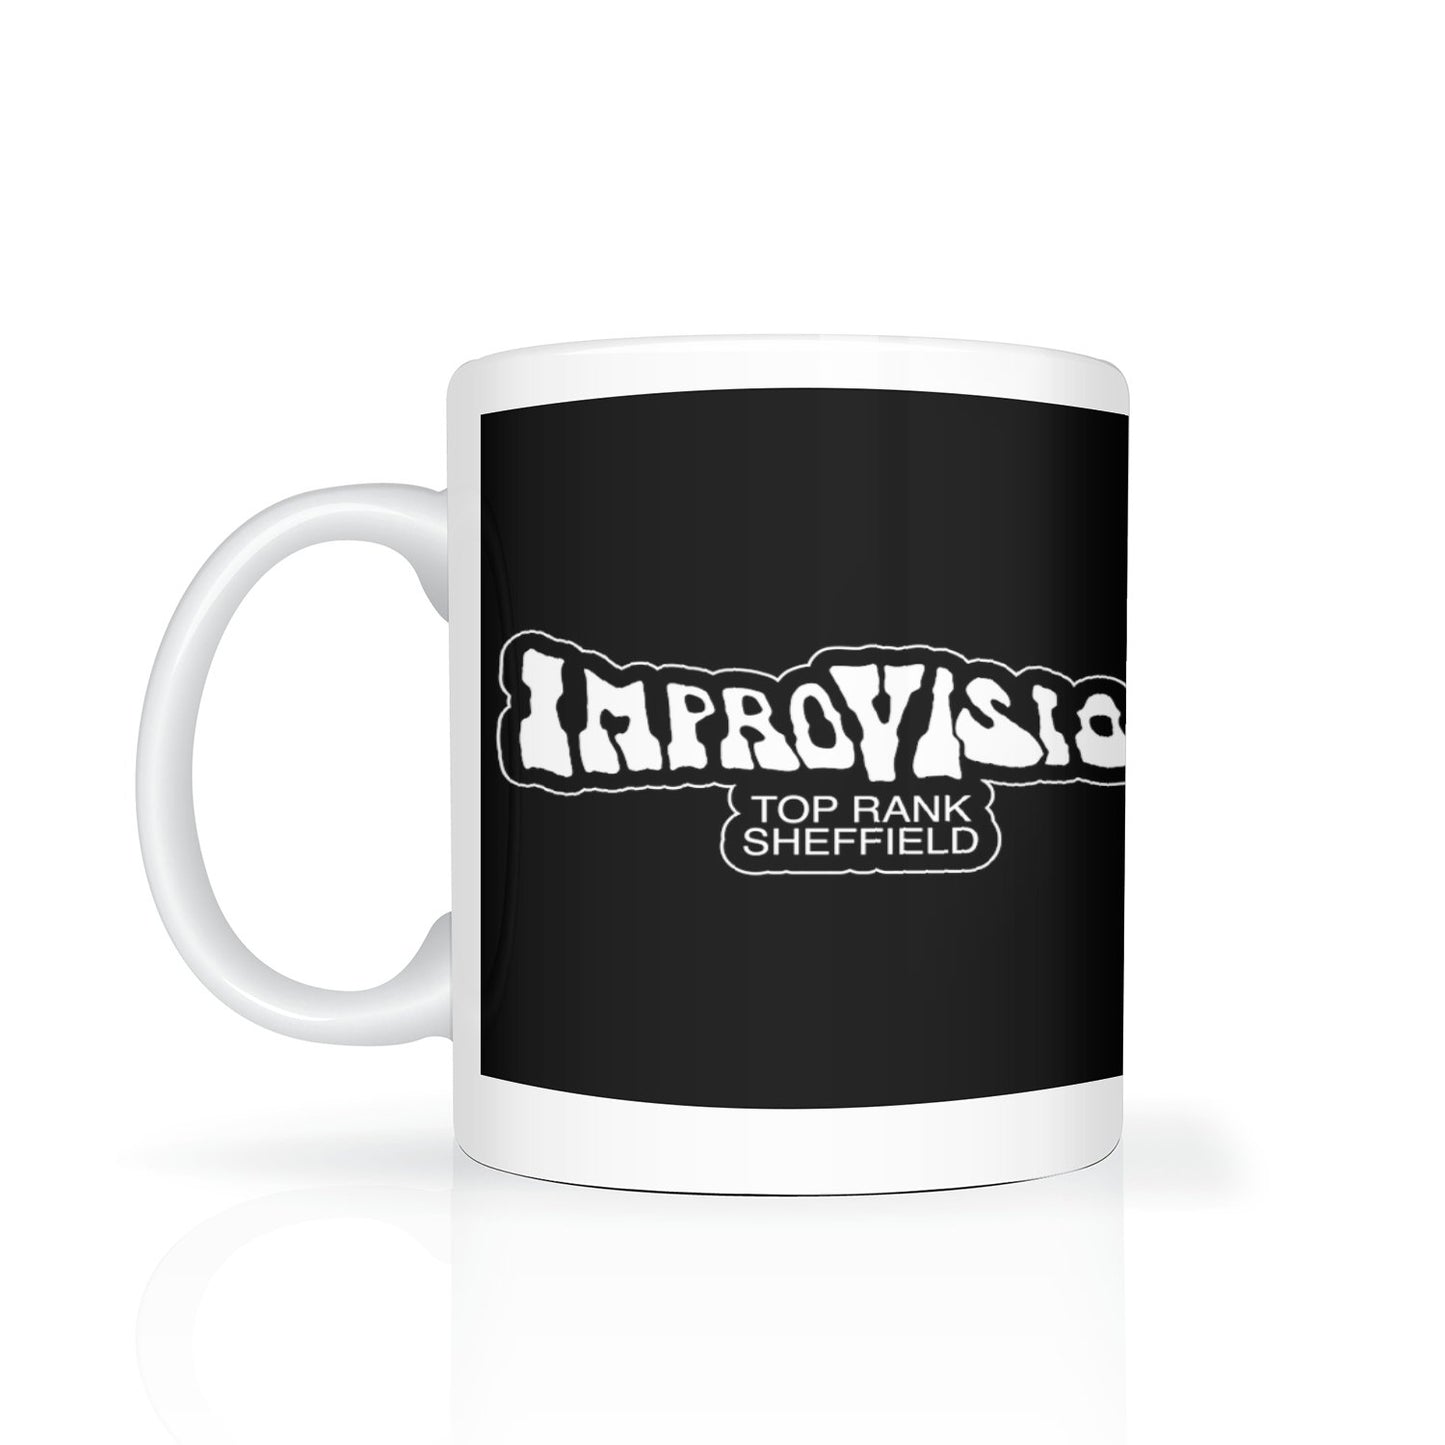 Improvision mug - Dirty Stop Outs